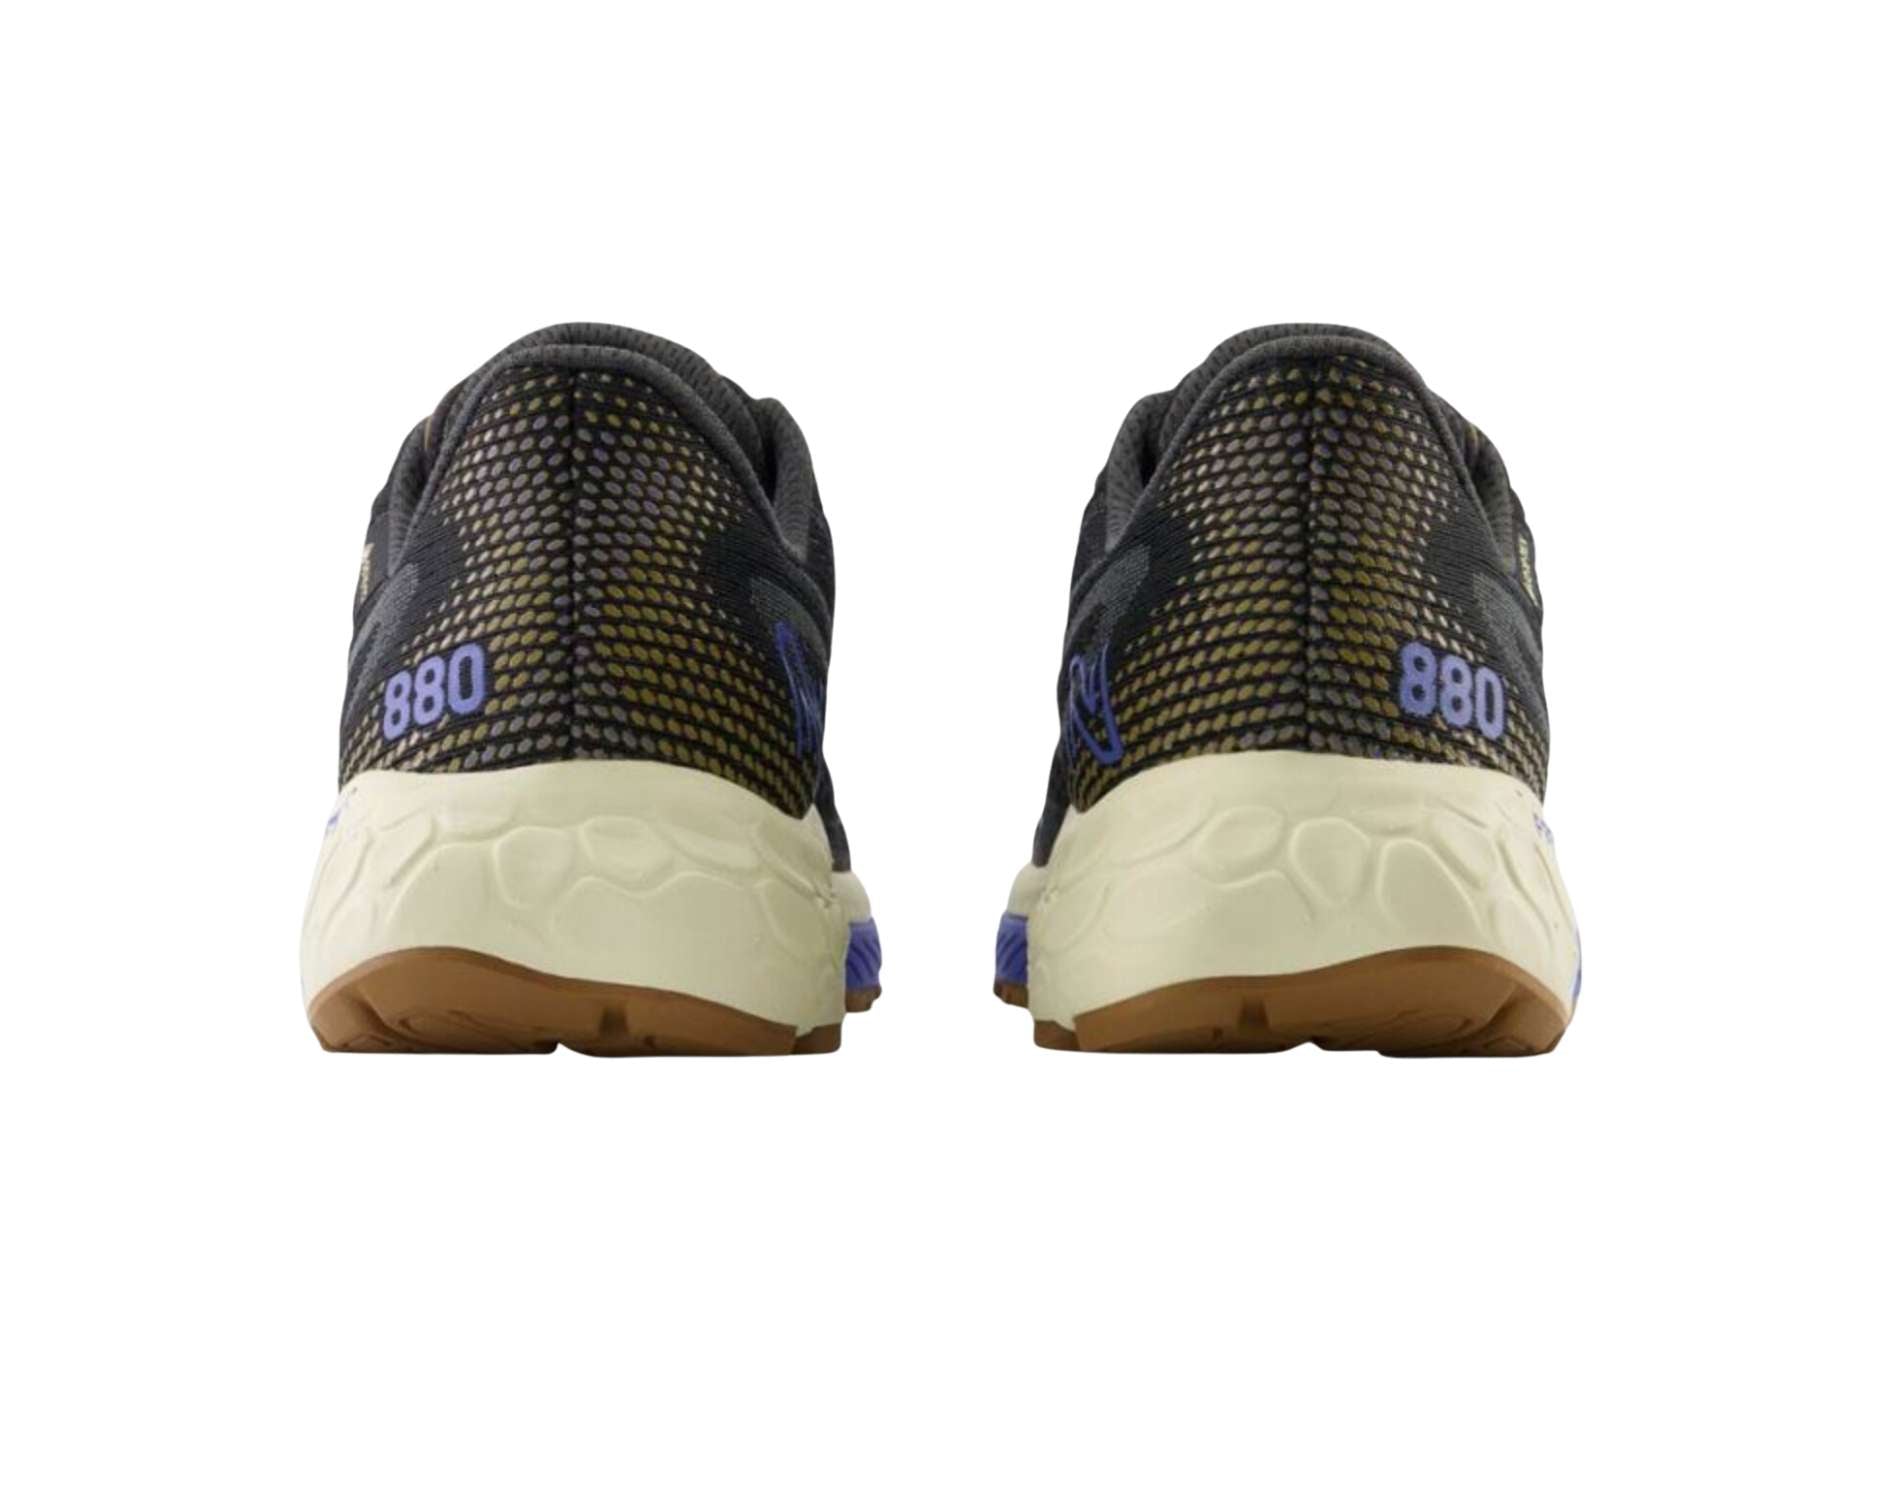 New Balance Fresh Foam 880 v 13 Gore-Tex shoe for women in d wide in colour black